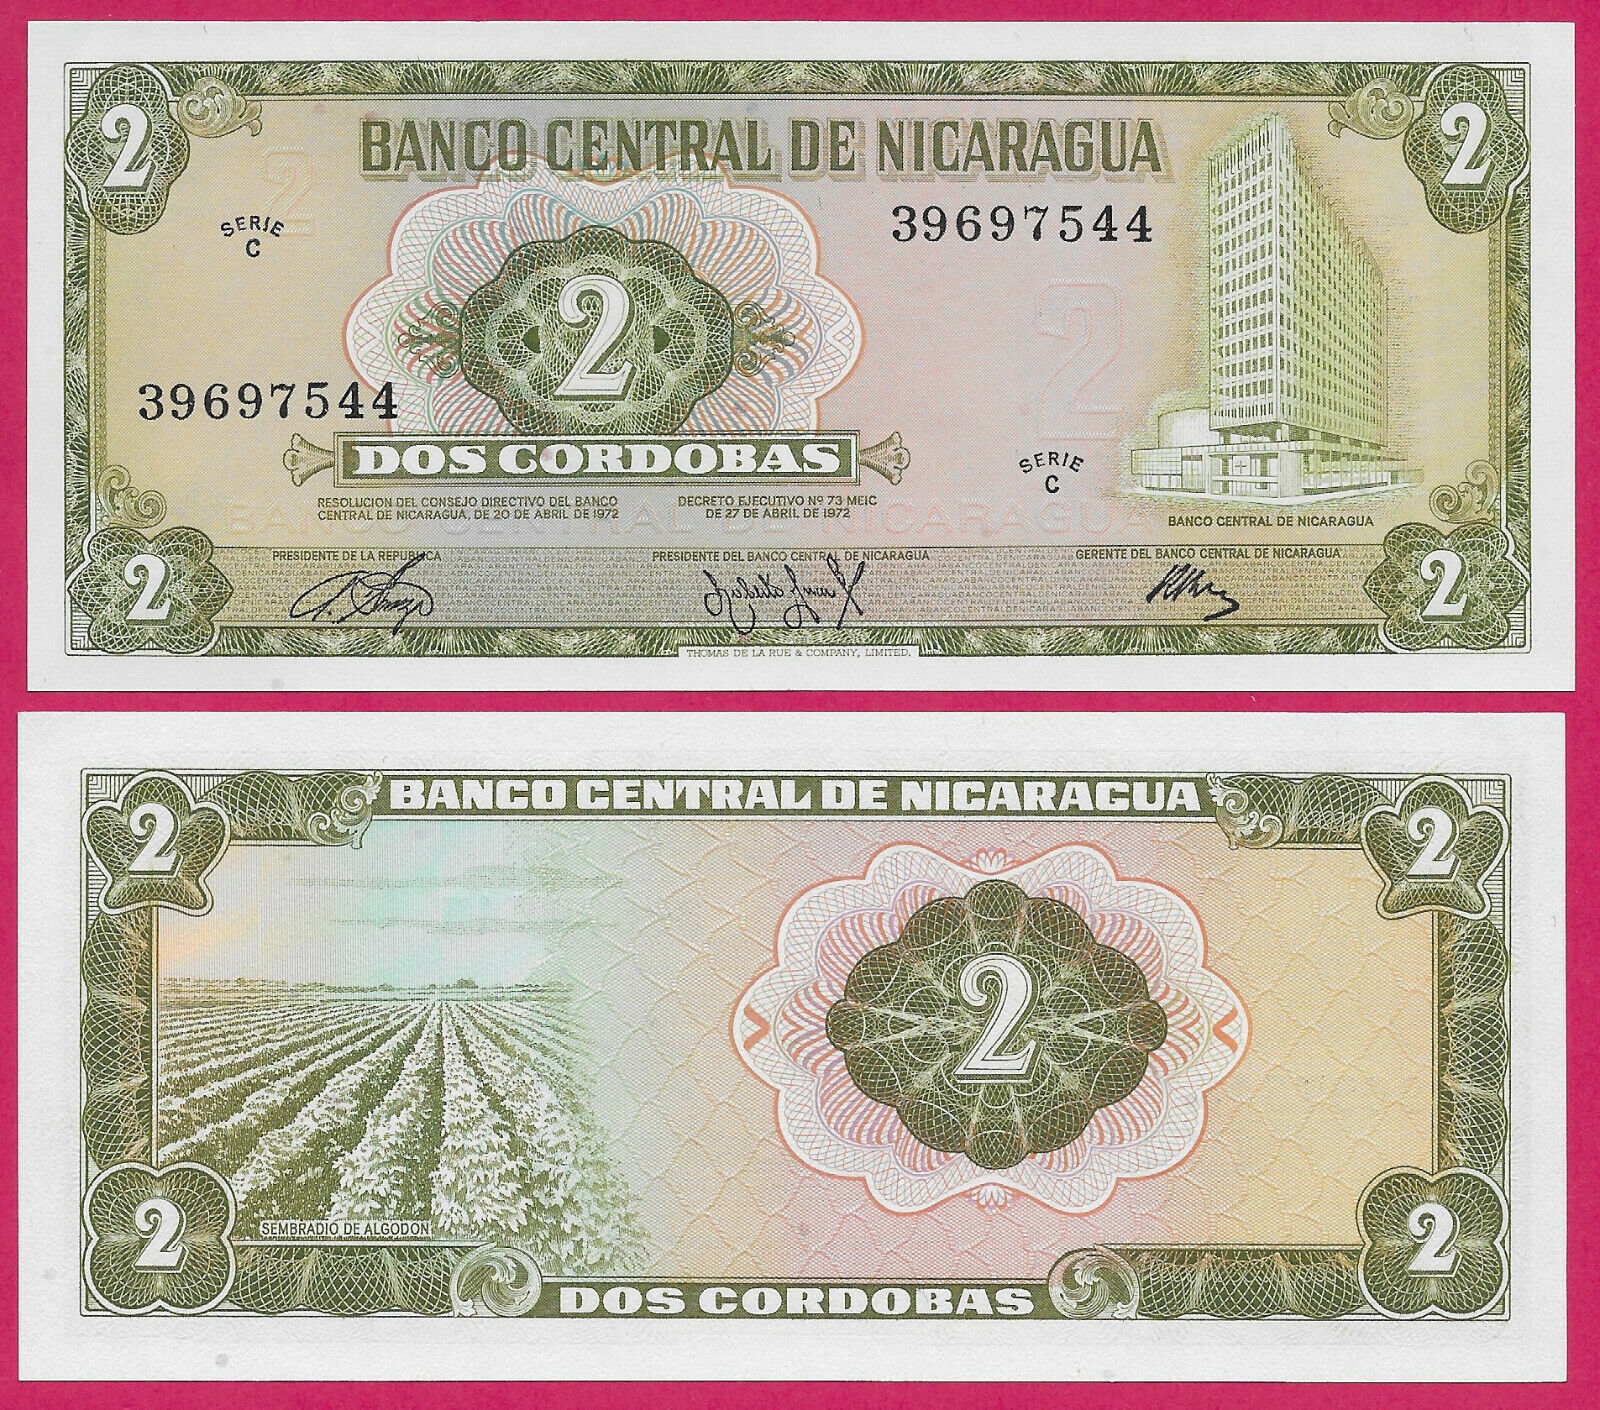 Nicaragua 2 Cordobas 1972 Unc Sembradio De Algodon-cotton Field,bank Of Nicaragu